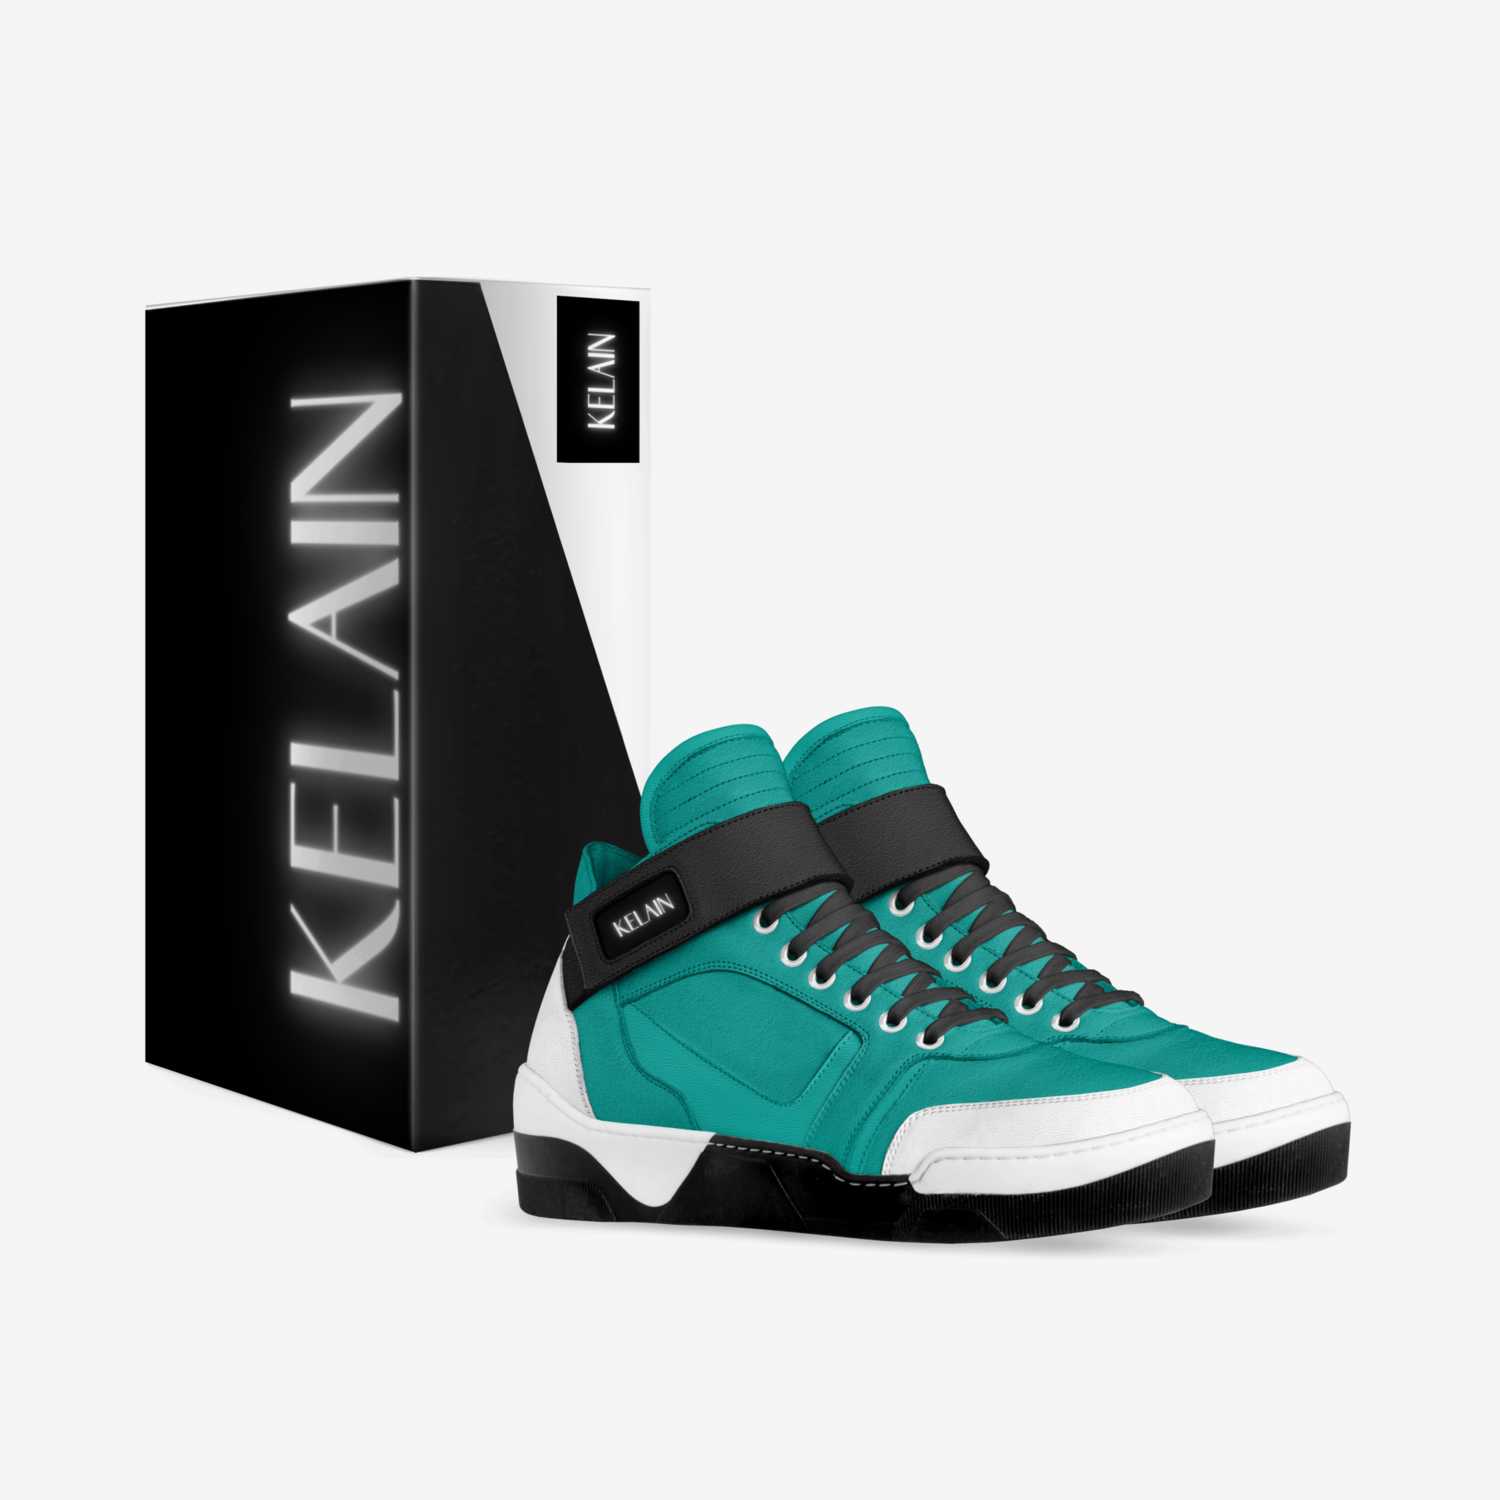 KELAIN custom made in Italy shoes by Joel Jimenez | Box view